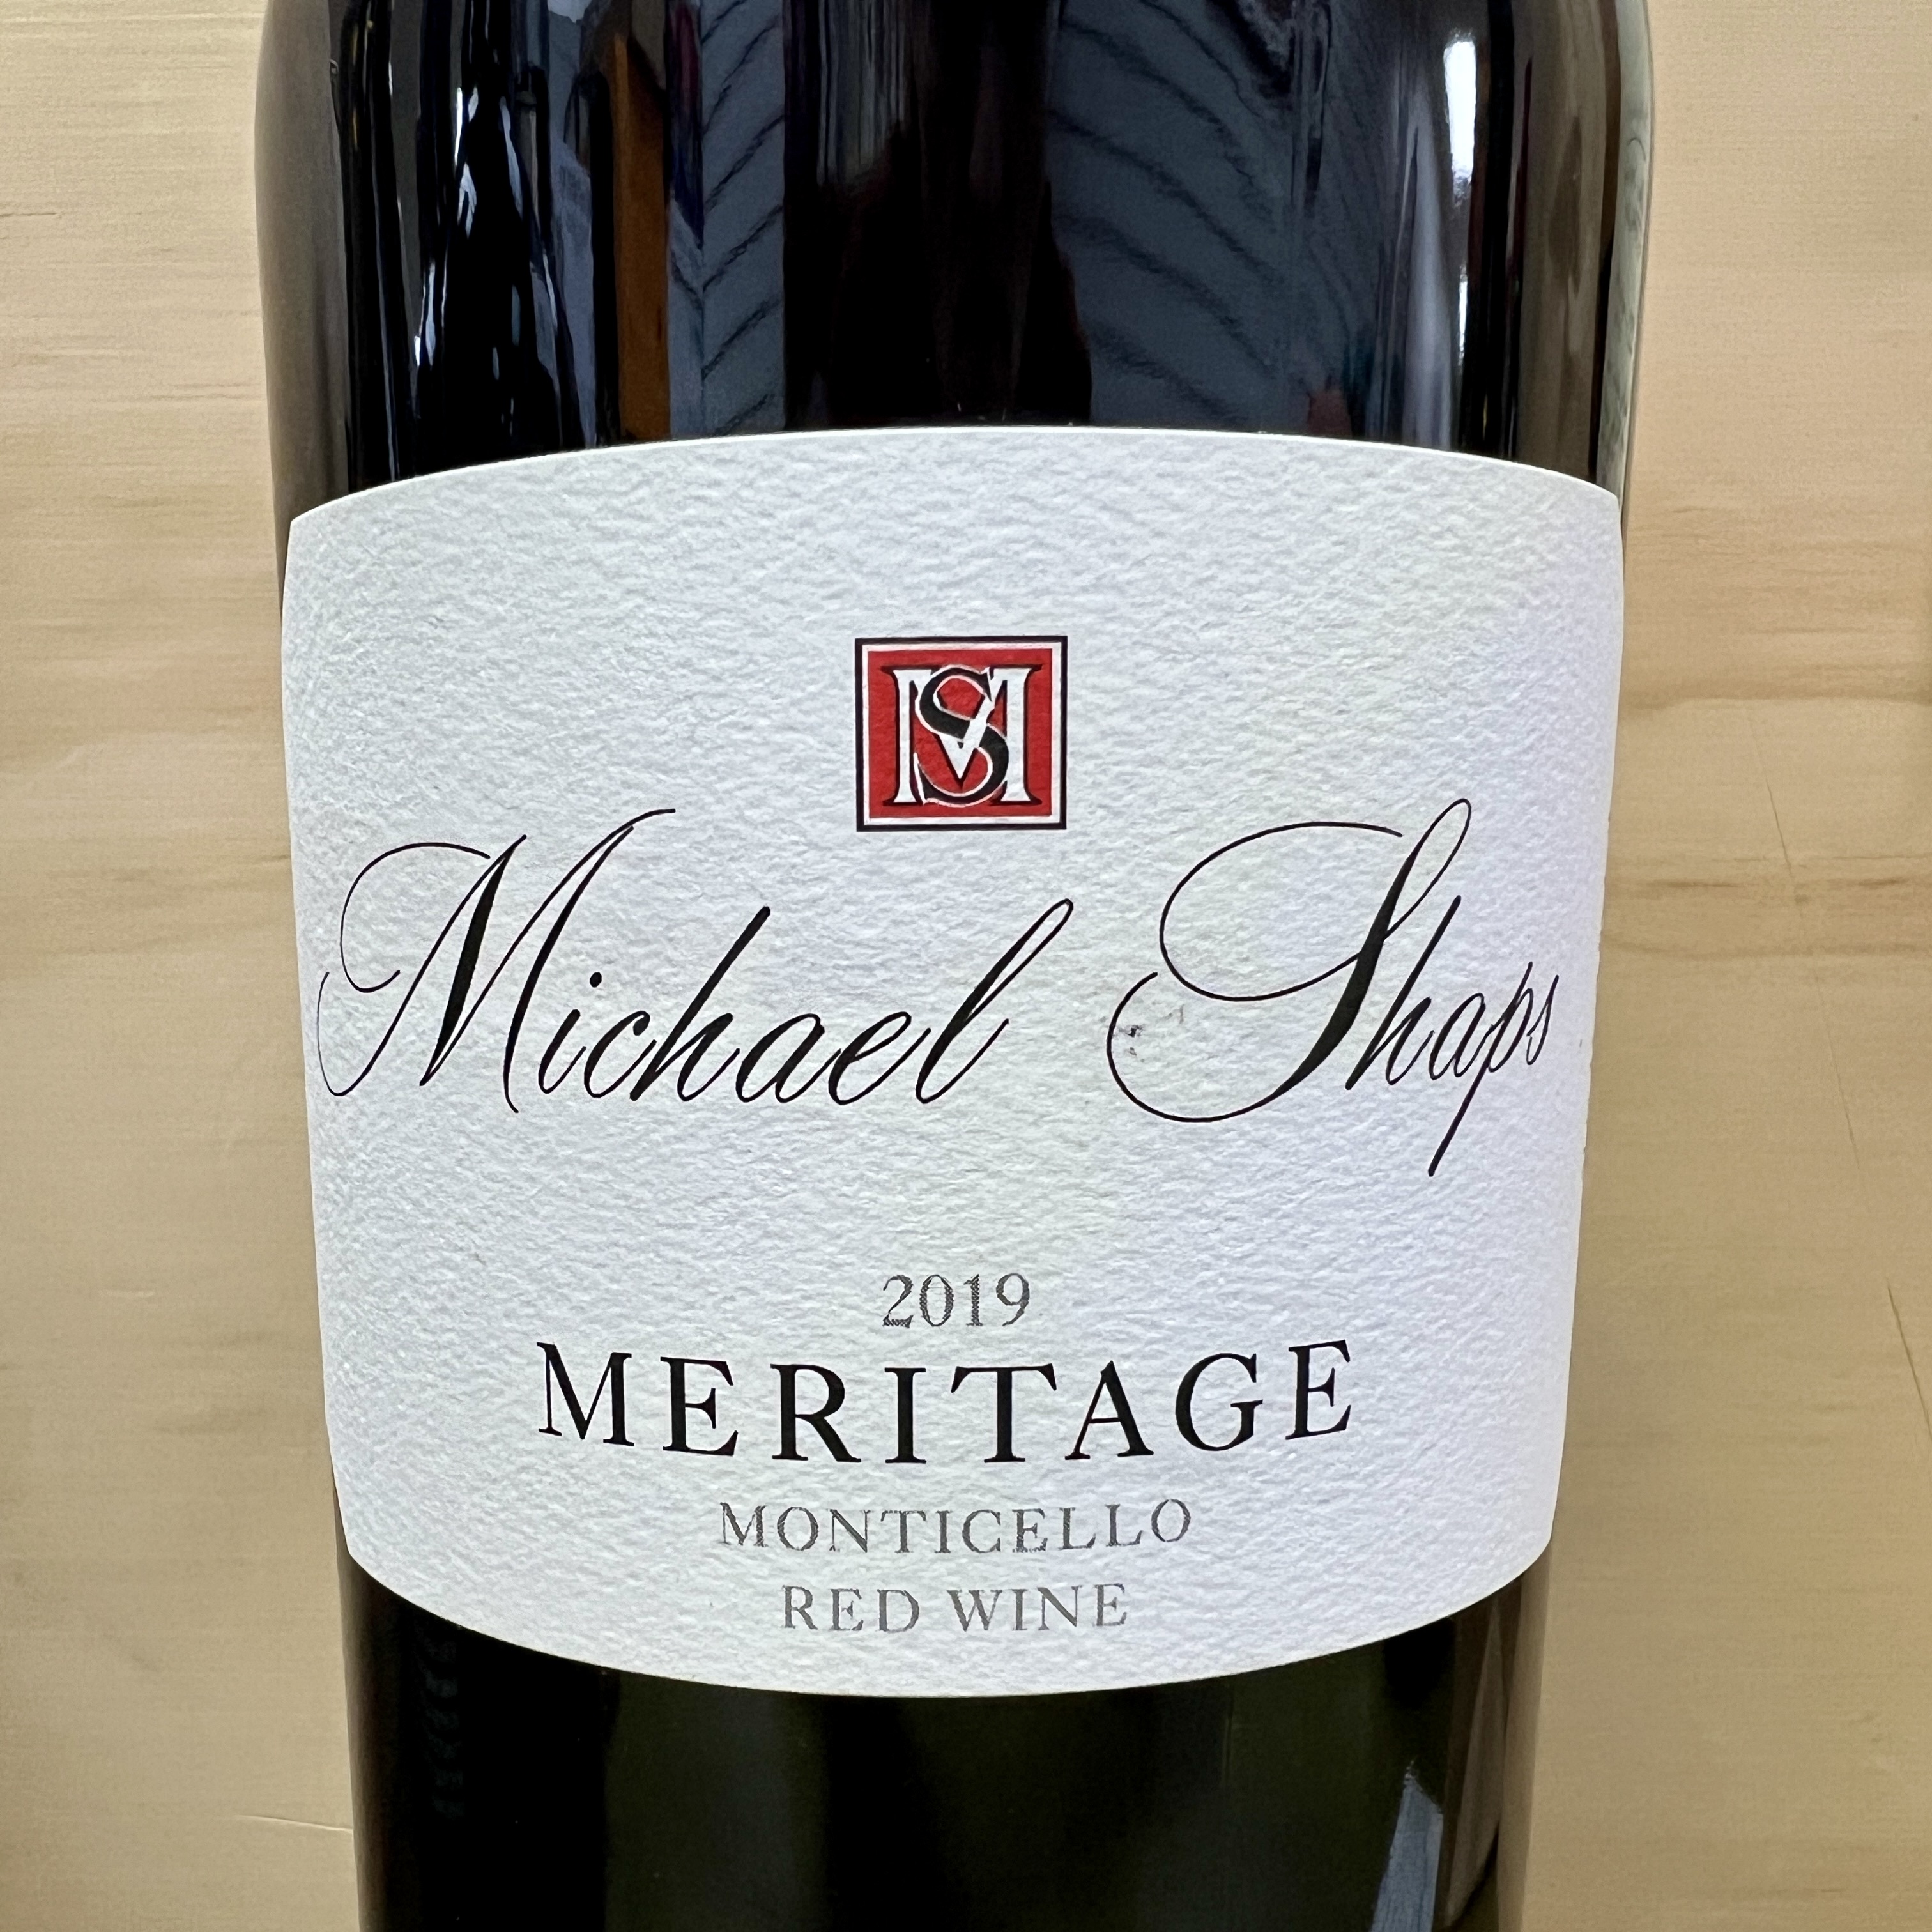 Michael Shaps Meritage Monticello 2019